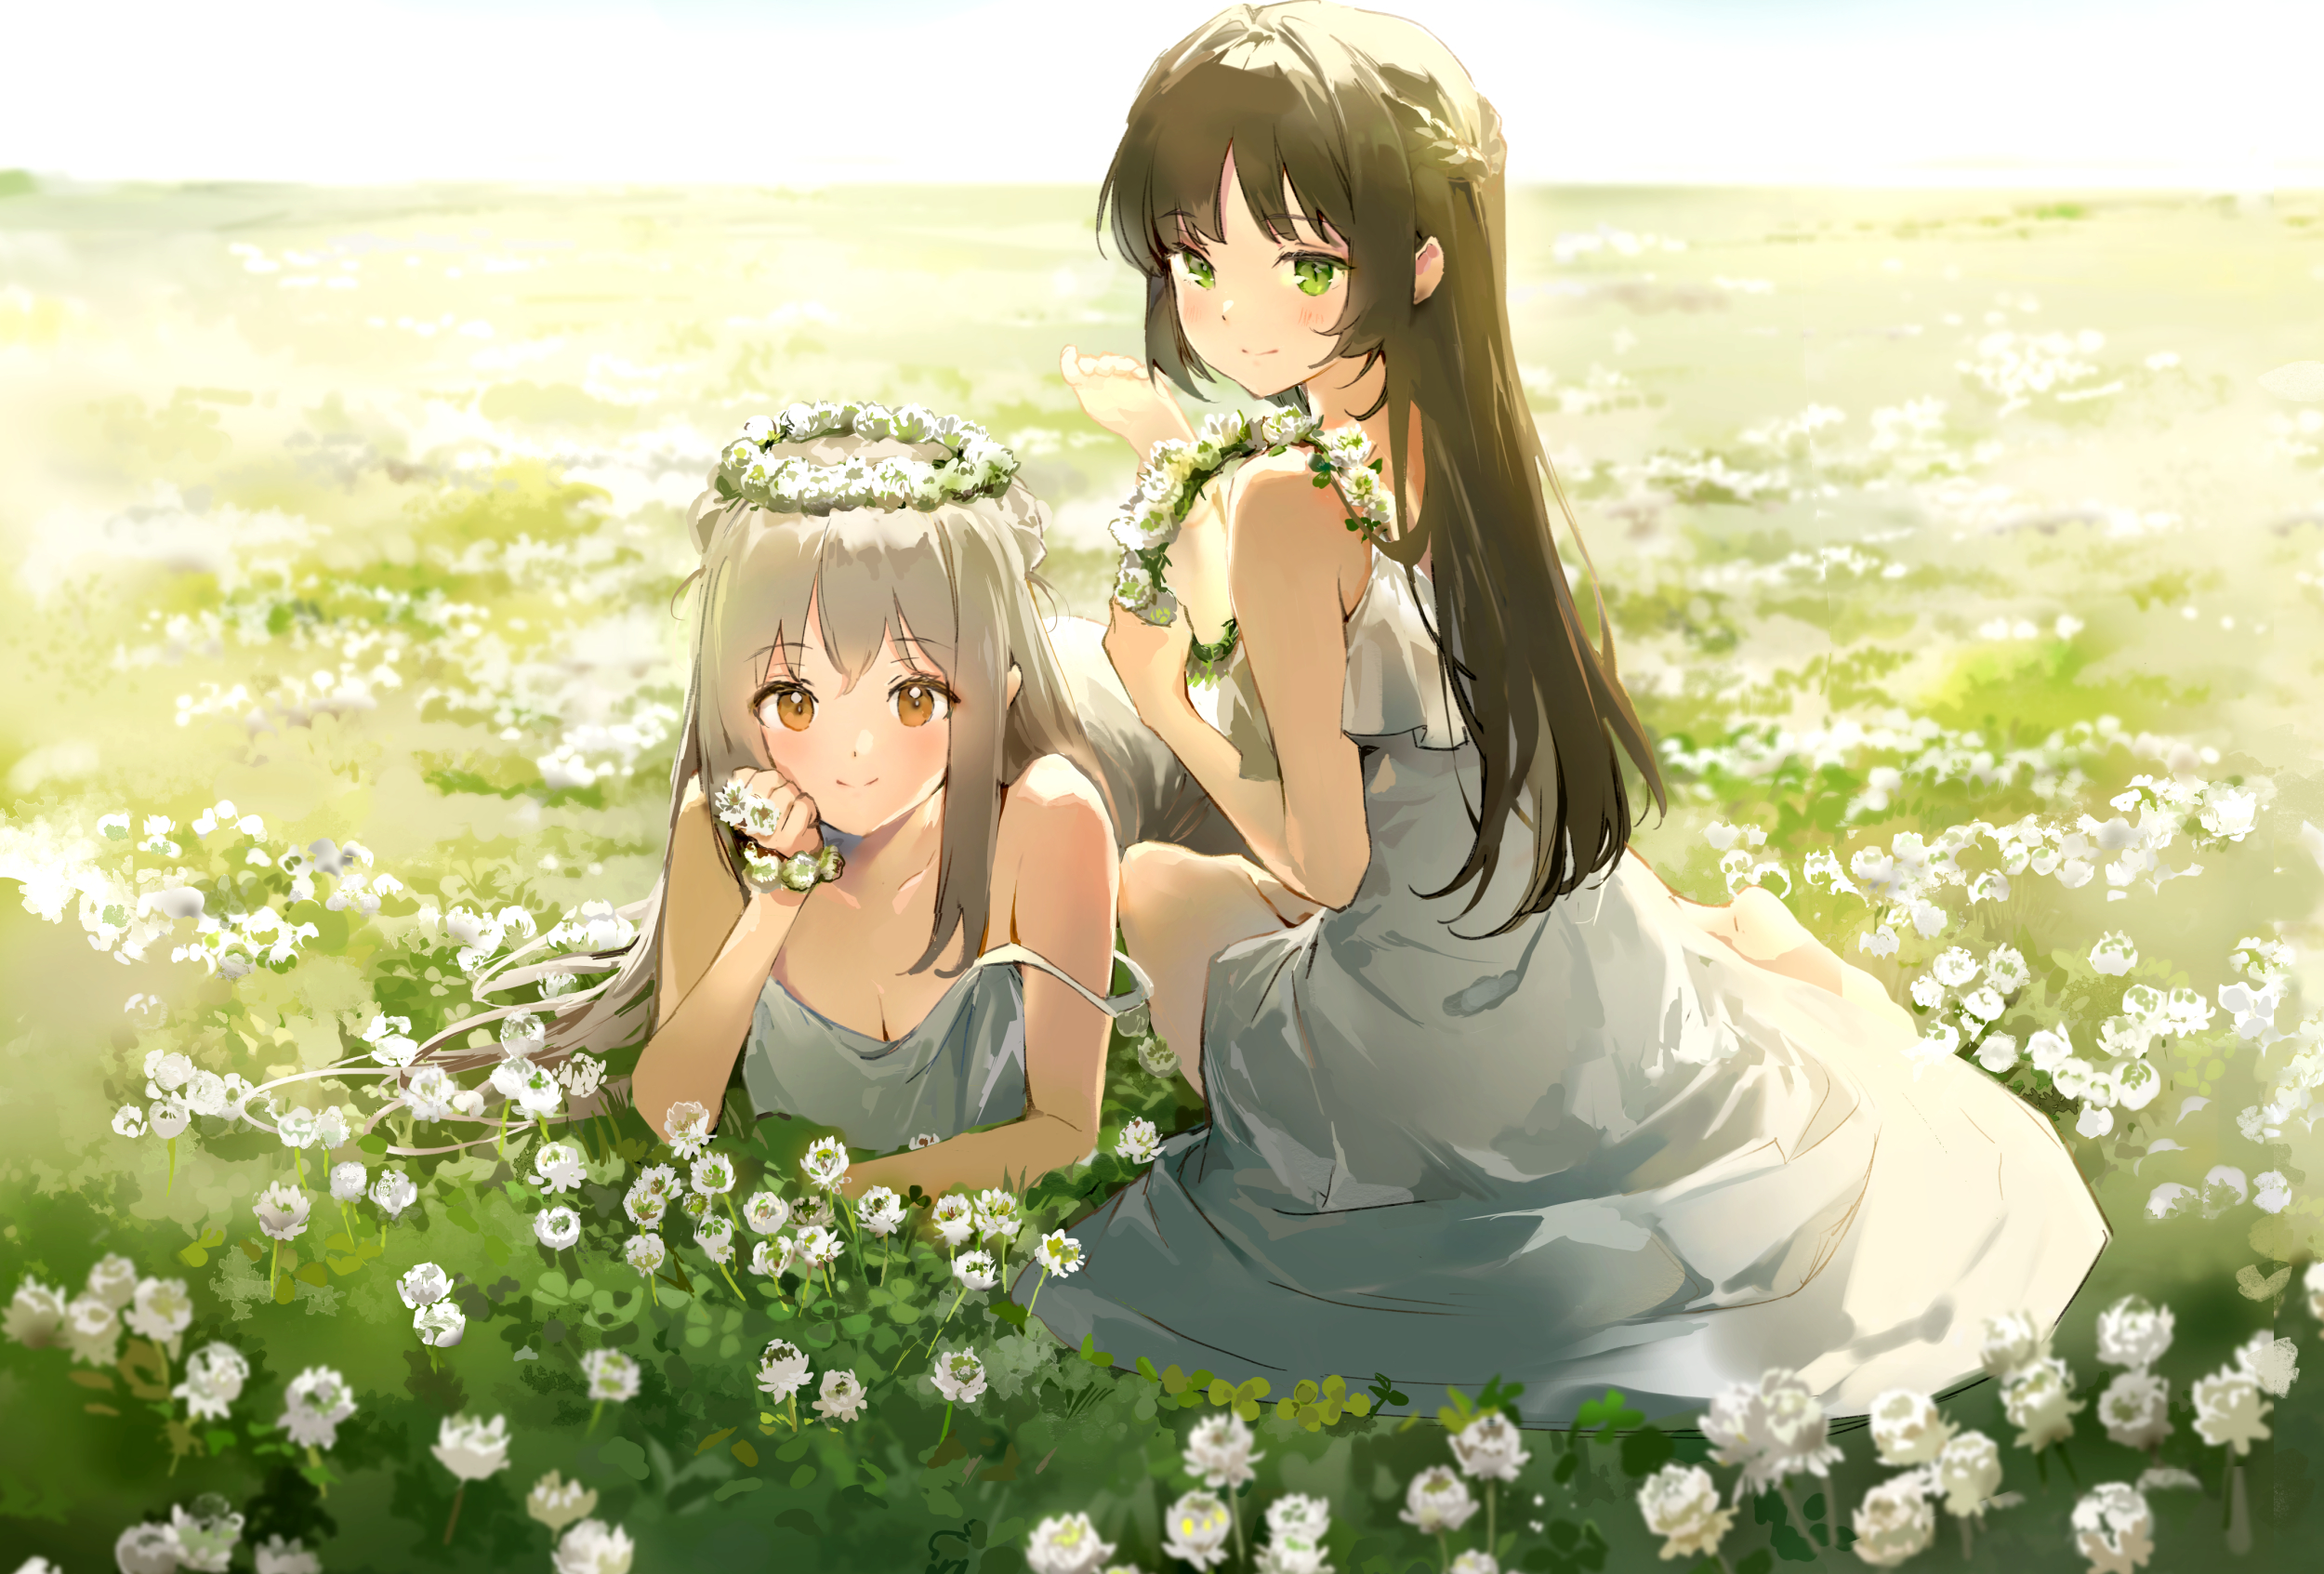 Anime 2500x1693 anime anime girls Pixiv flower crown field white dress looking at viewer Anmi flowers smiling dress squatting blushing long hair sunlight